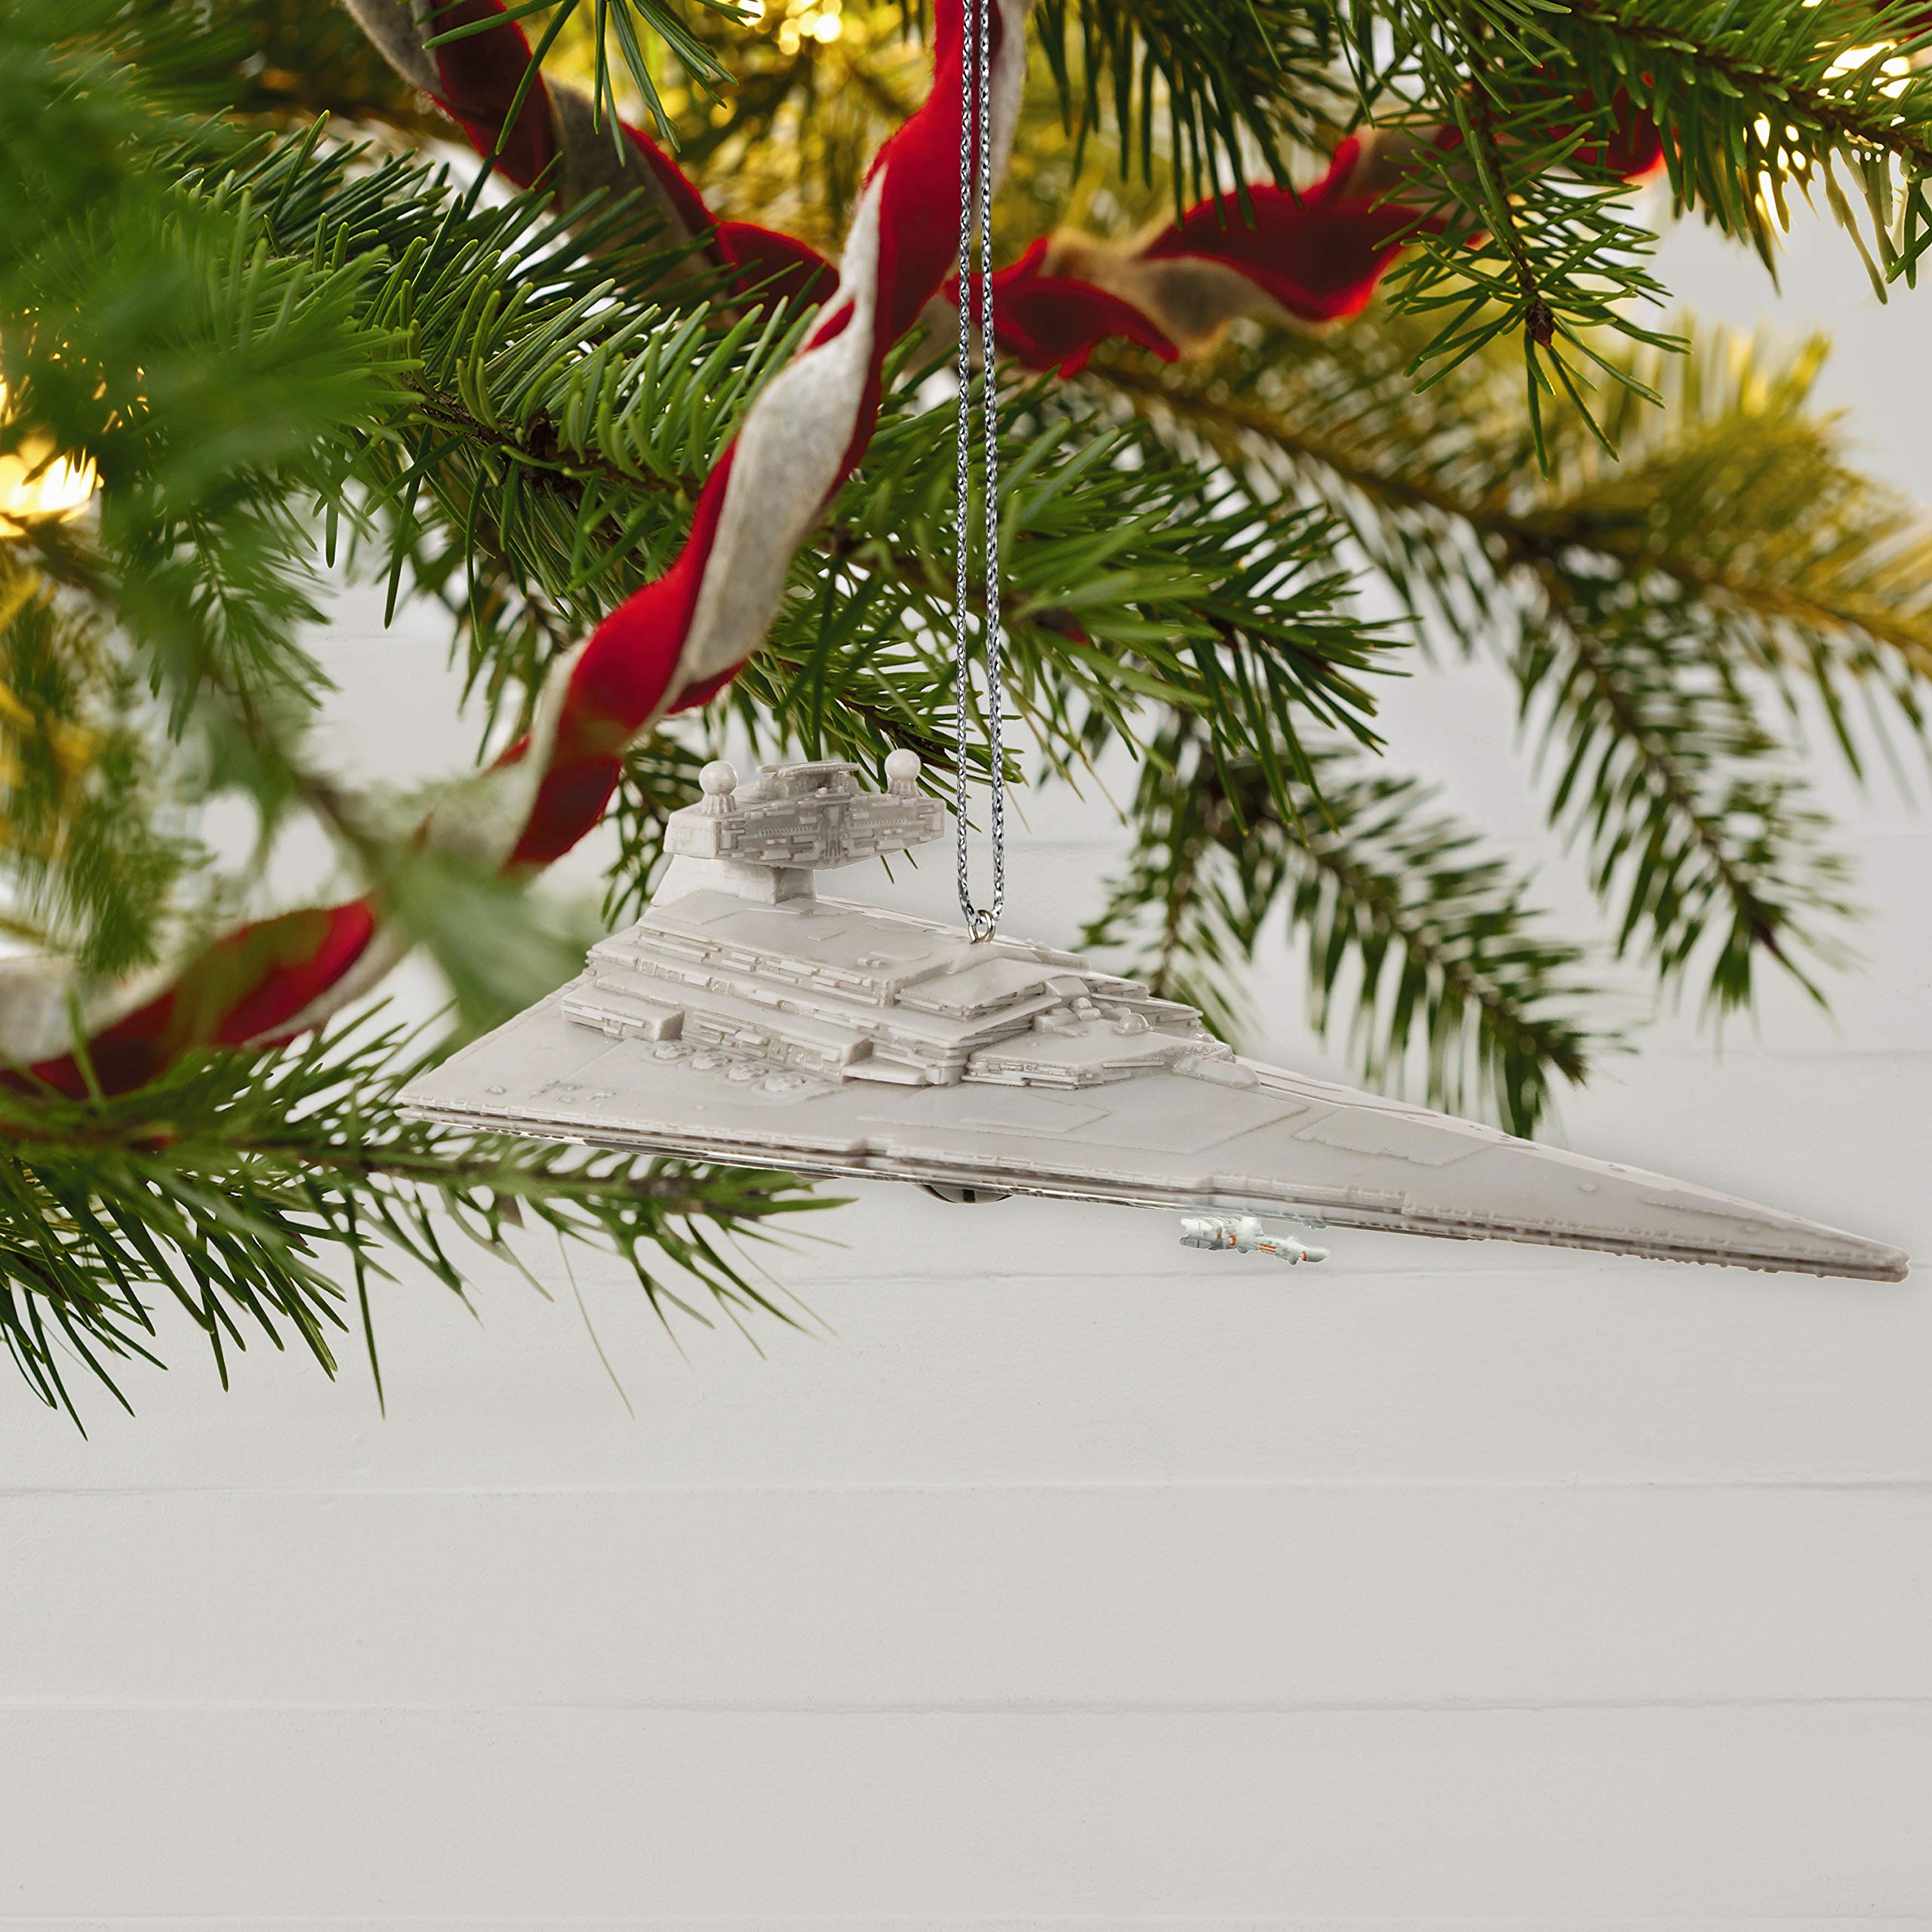 Imperial Star Destroyer Hallmark Keepsake Christmas Ornament